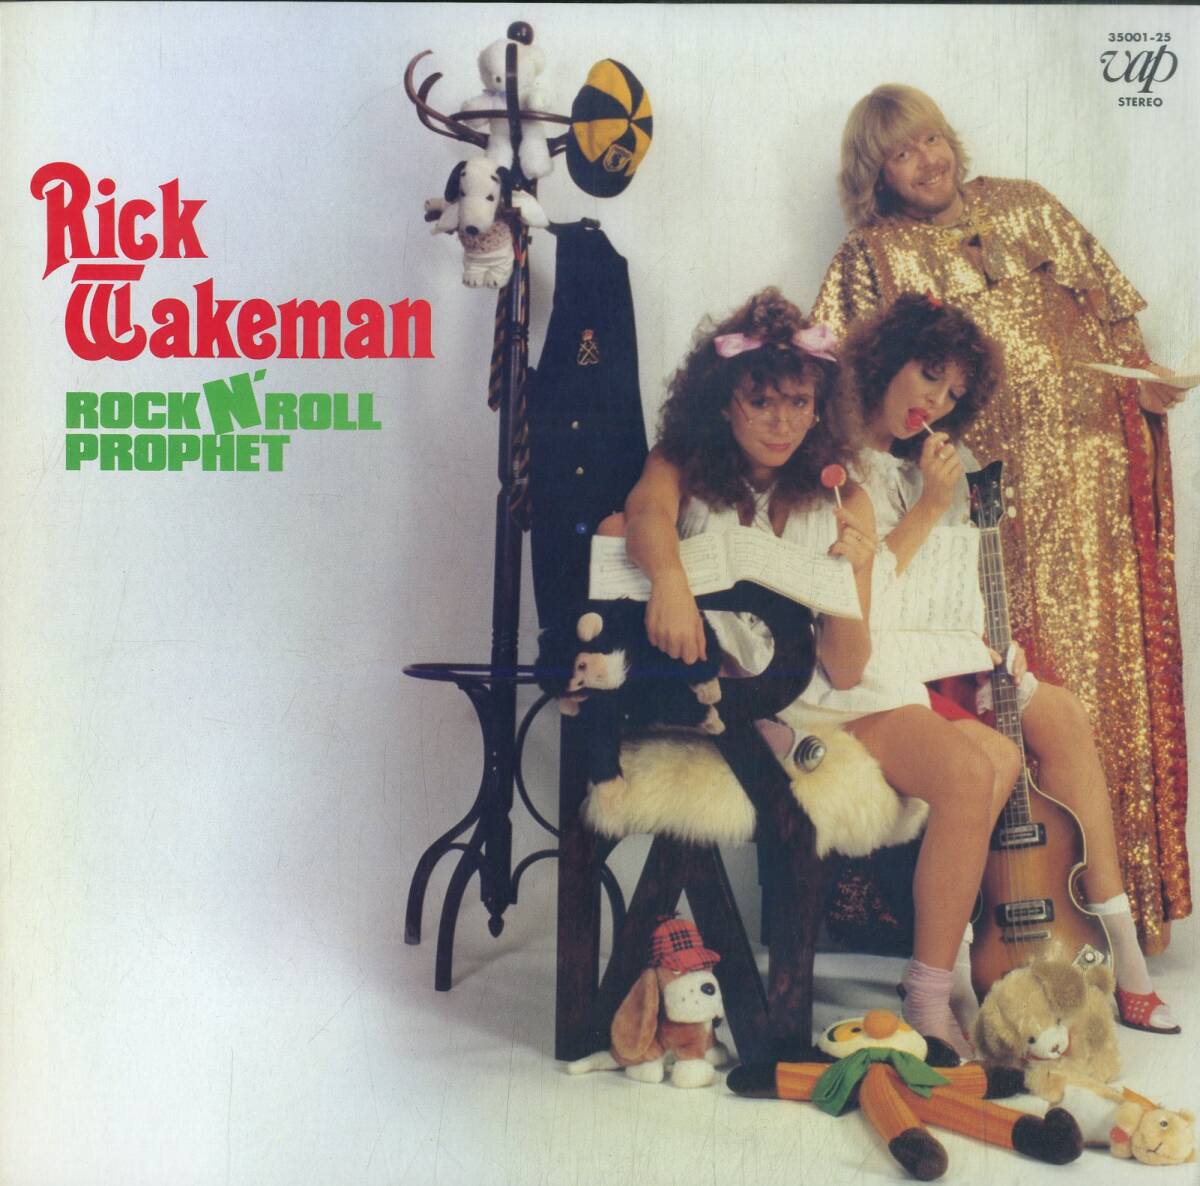 A00594026/LP/リック・ウエイクマン (RICK WAKEMAN・イエス・YES)「Rock N Roll Prophet (1982年・35001-25・プログレ)」の画像1